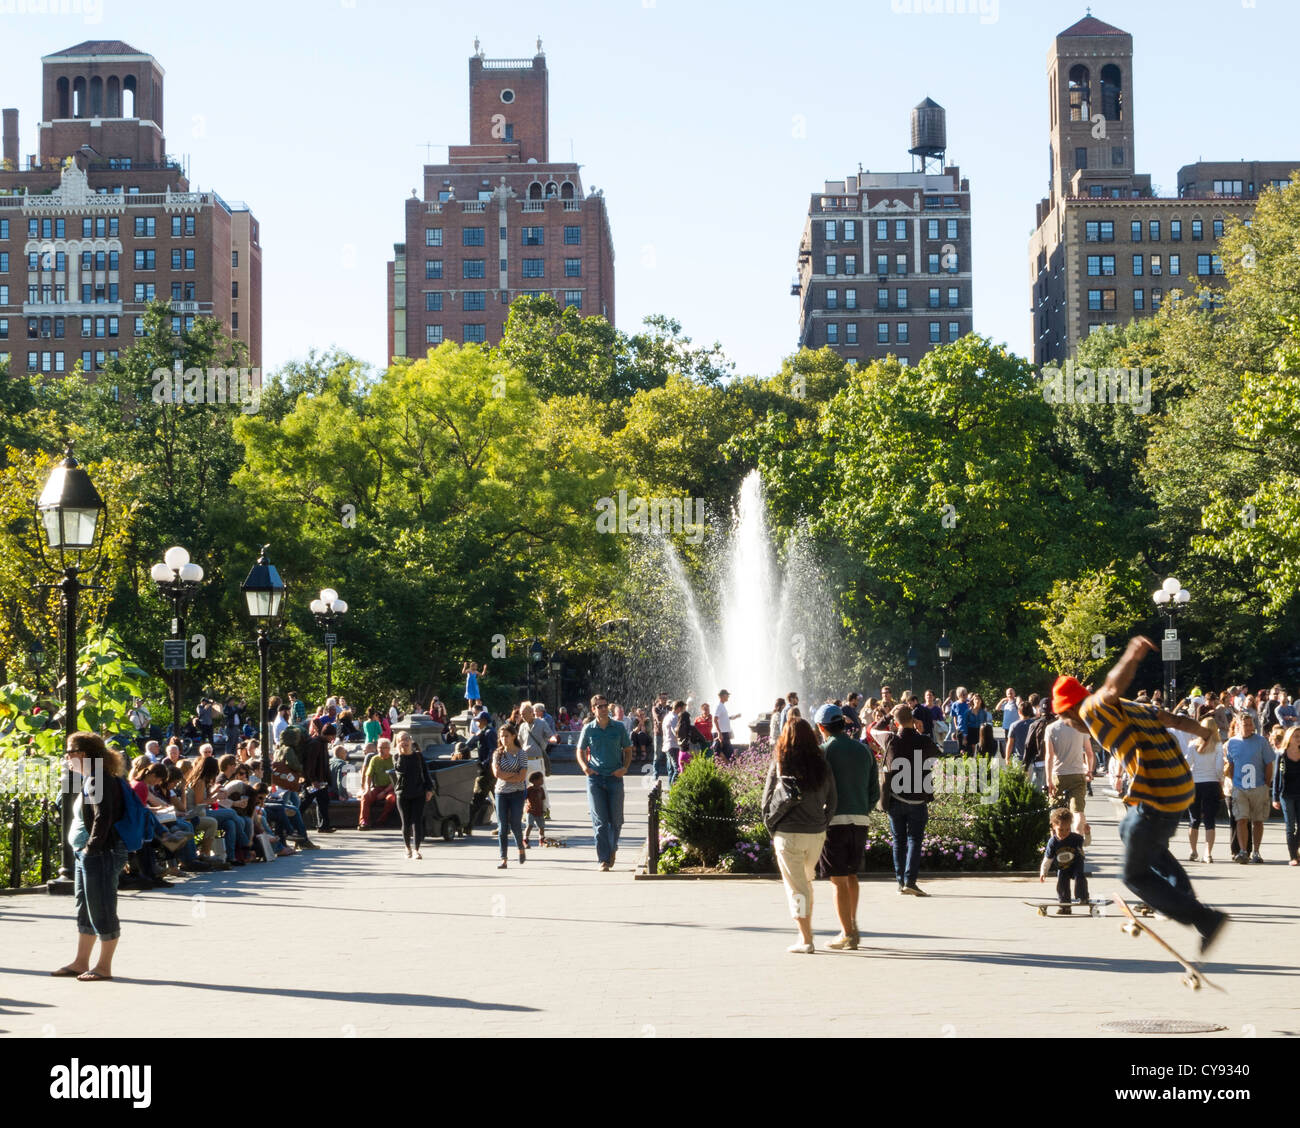 La fontana e la folla, Washington Square Park, Greenwich Village, NYC Foto Stock